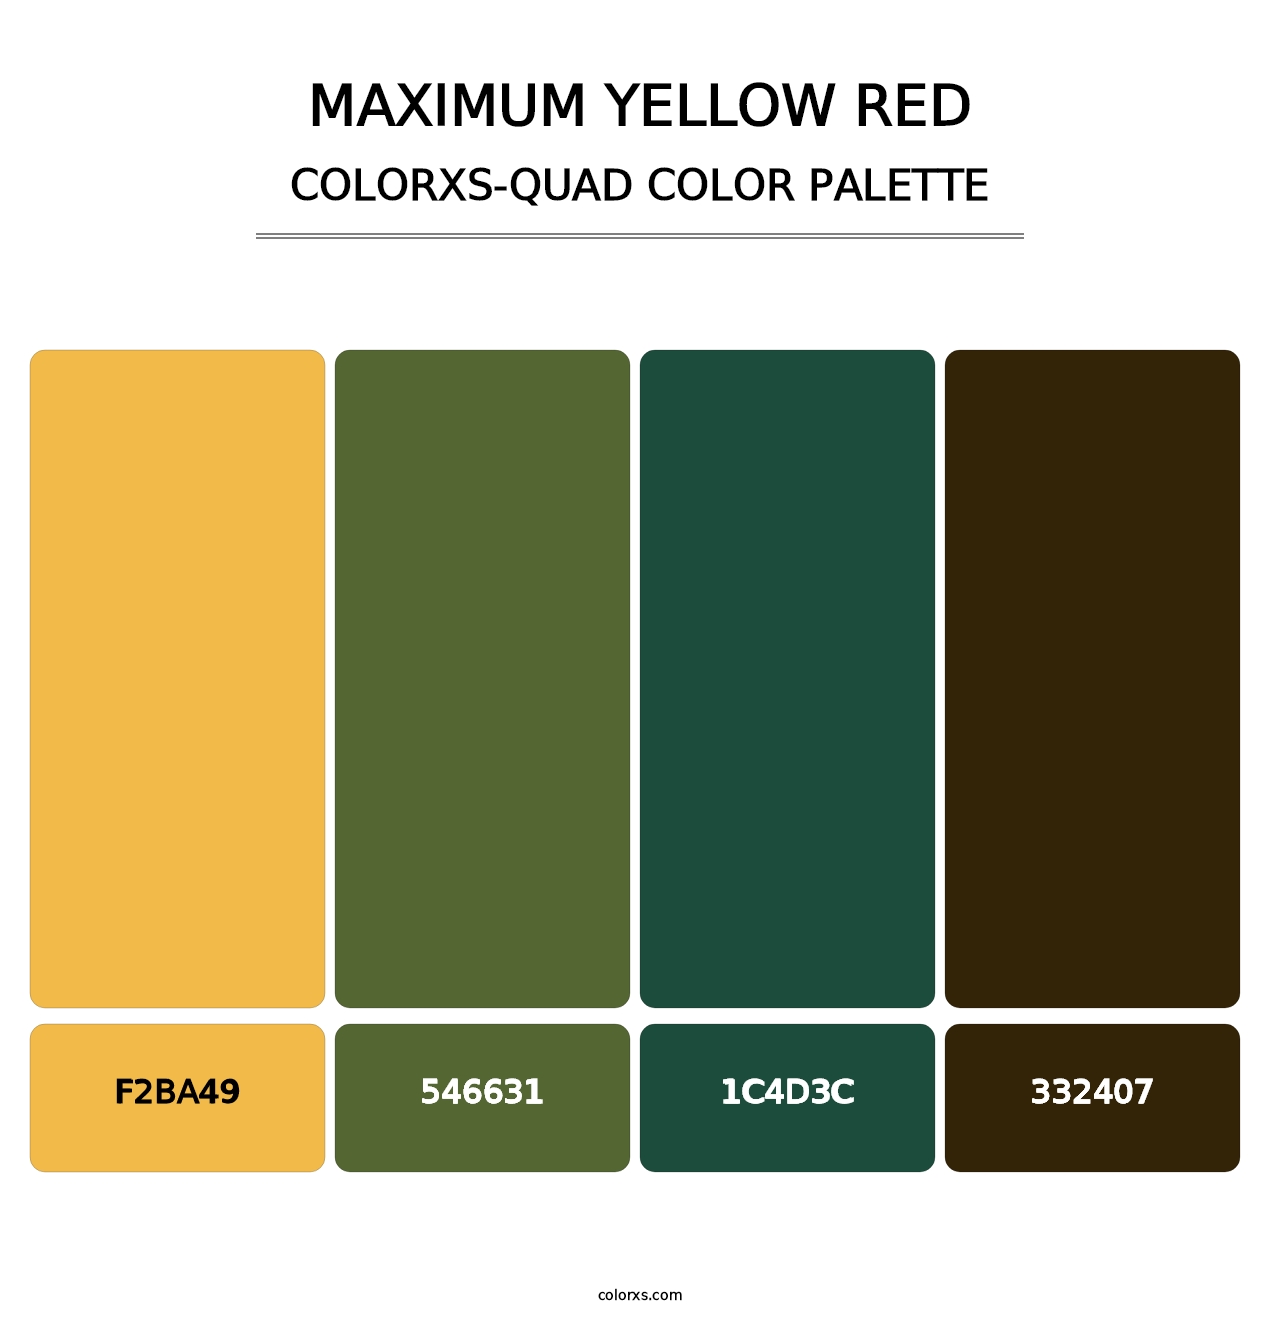 Maximum Yellow Red - Colorxs Quad Palette